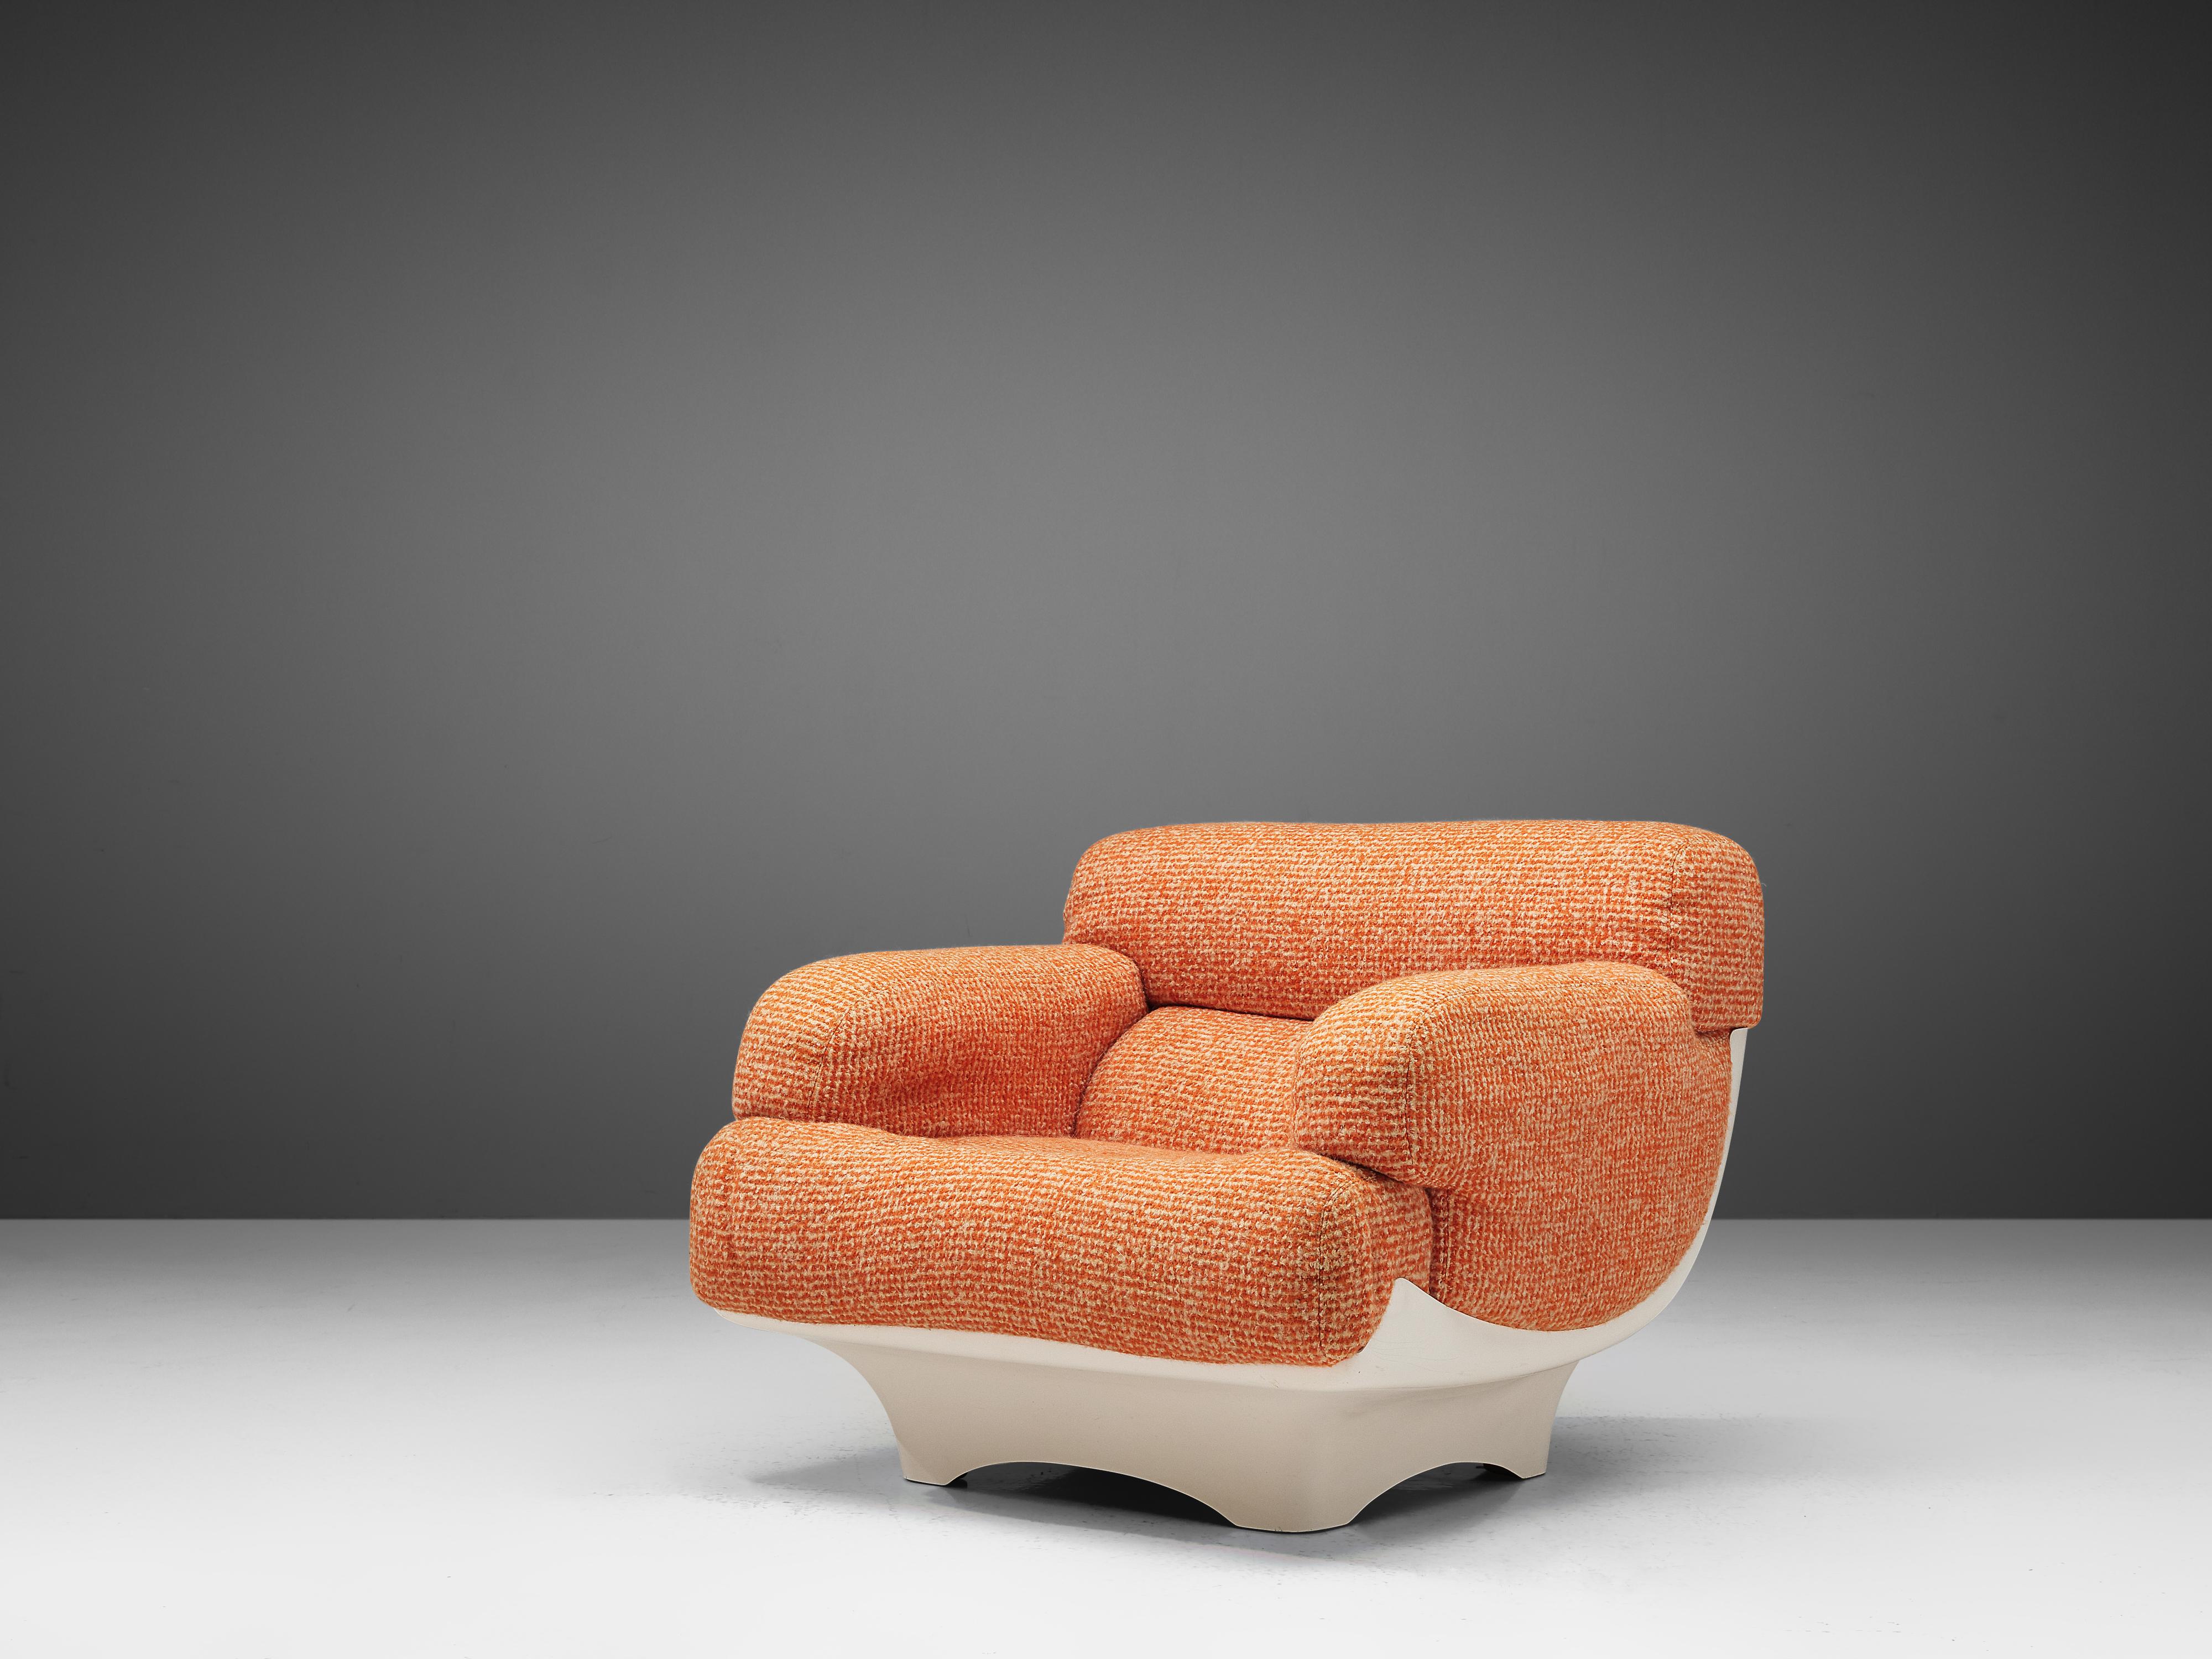 Late 20th Century French Lounge Chair in White Fiberglass and Original Orange Fabric